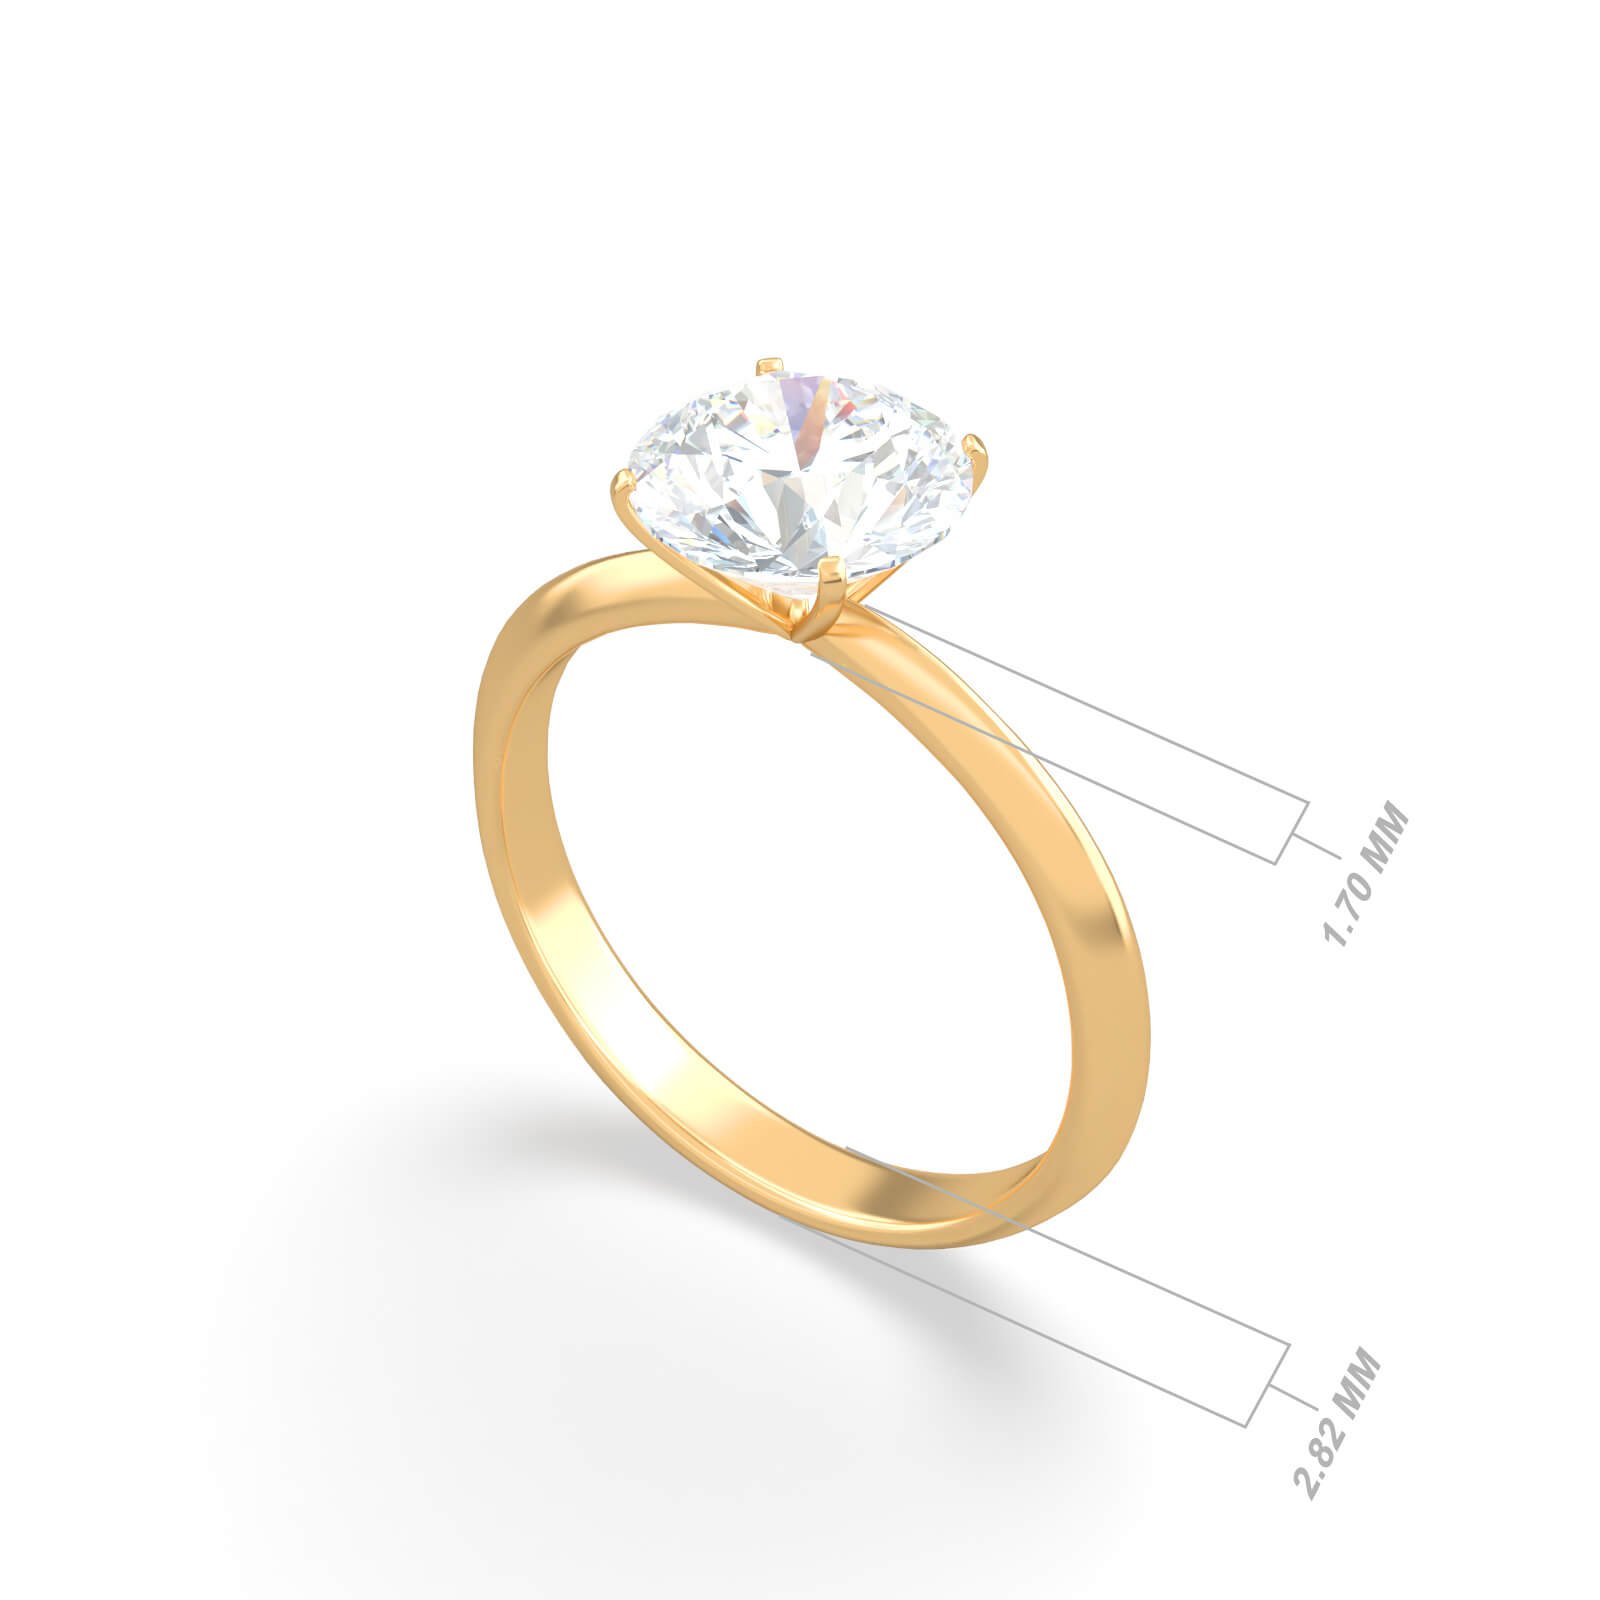 She Said Yes Engagement Ring | Aquae Jewels